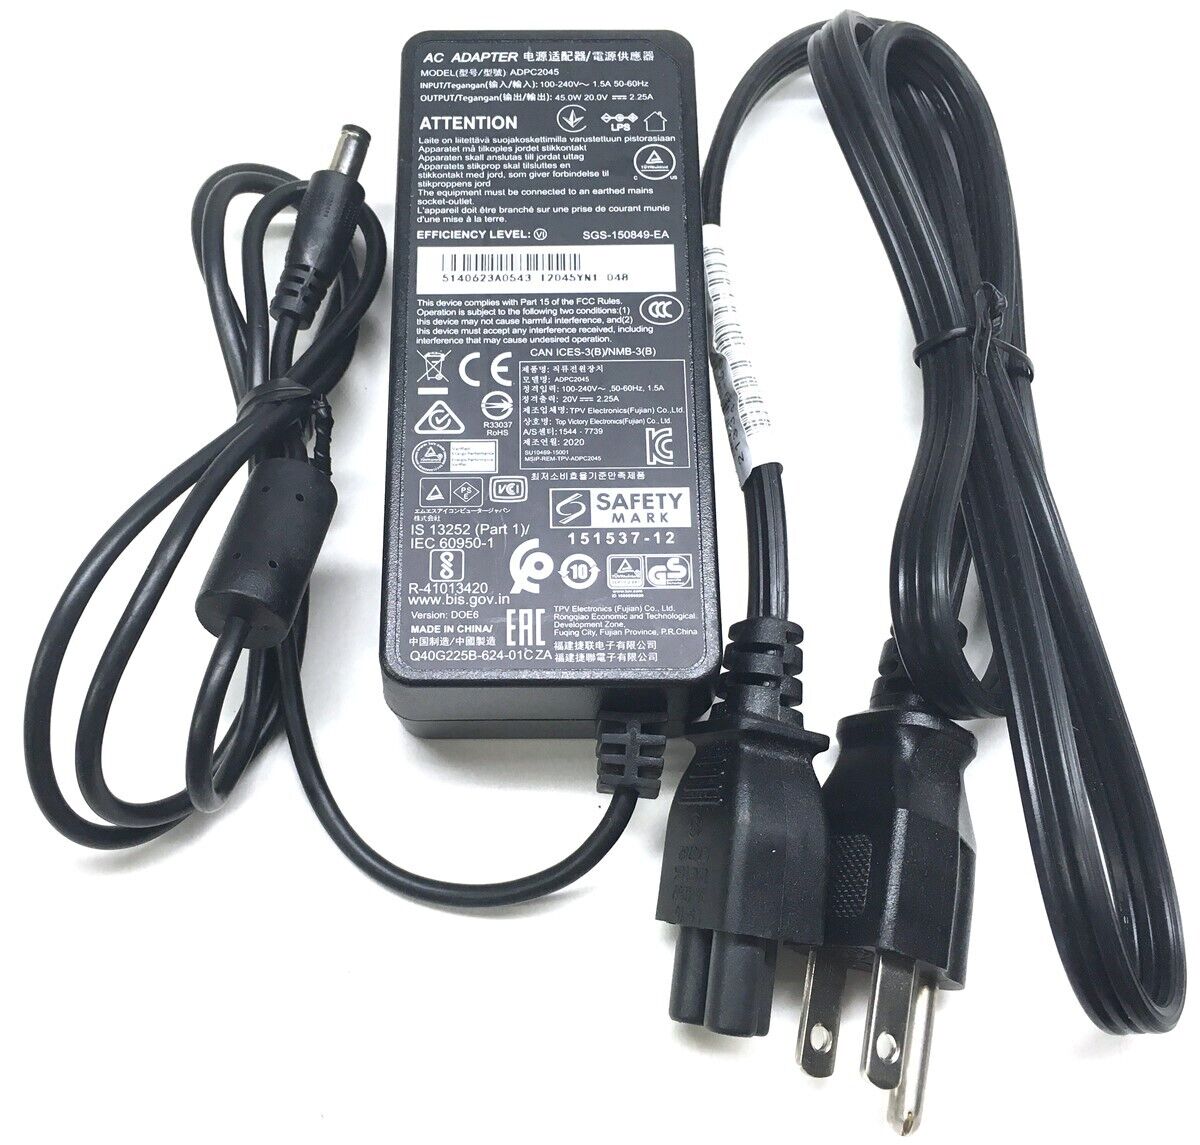 Genuine TPV AC Adapter Power Supply for MSI AOC Monitors ADPC2045 20V 2.25A 45W 